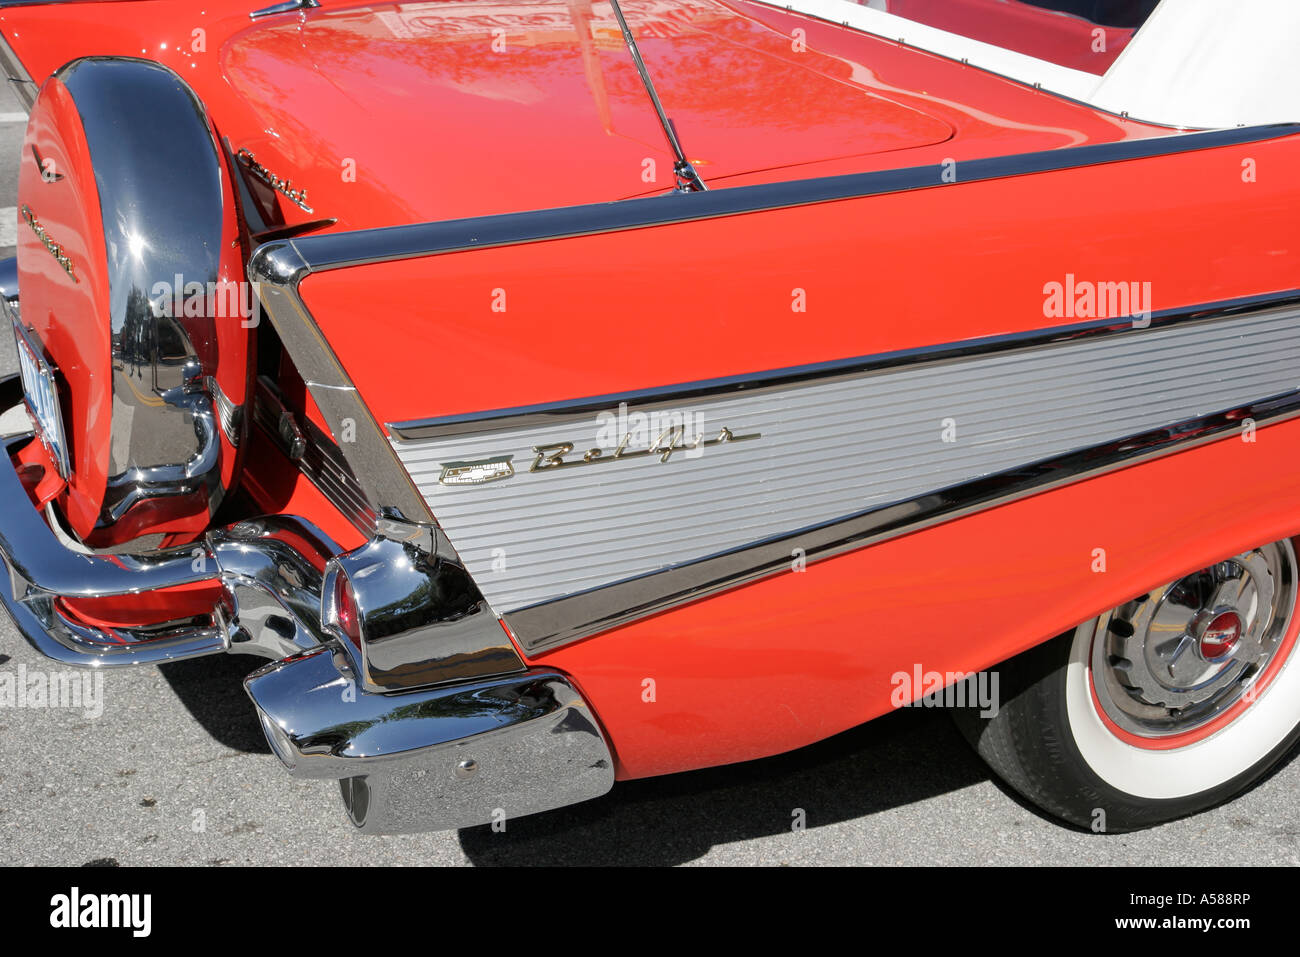 Miami Florida,Coral Gables,Classic car cars Show,collectors,nostalgia nostalgic retro,investment,restore,hobby,Americana,1957 Chevrolet Bel Air,red,sp Stock Photo